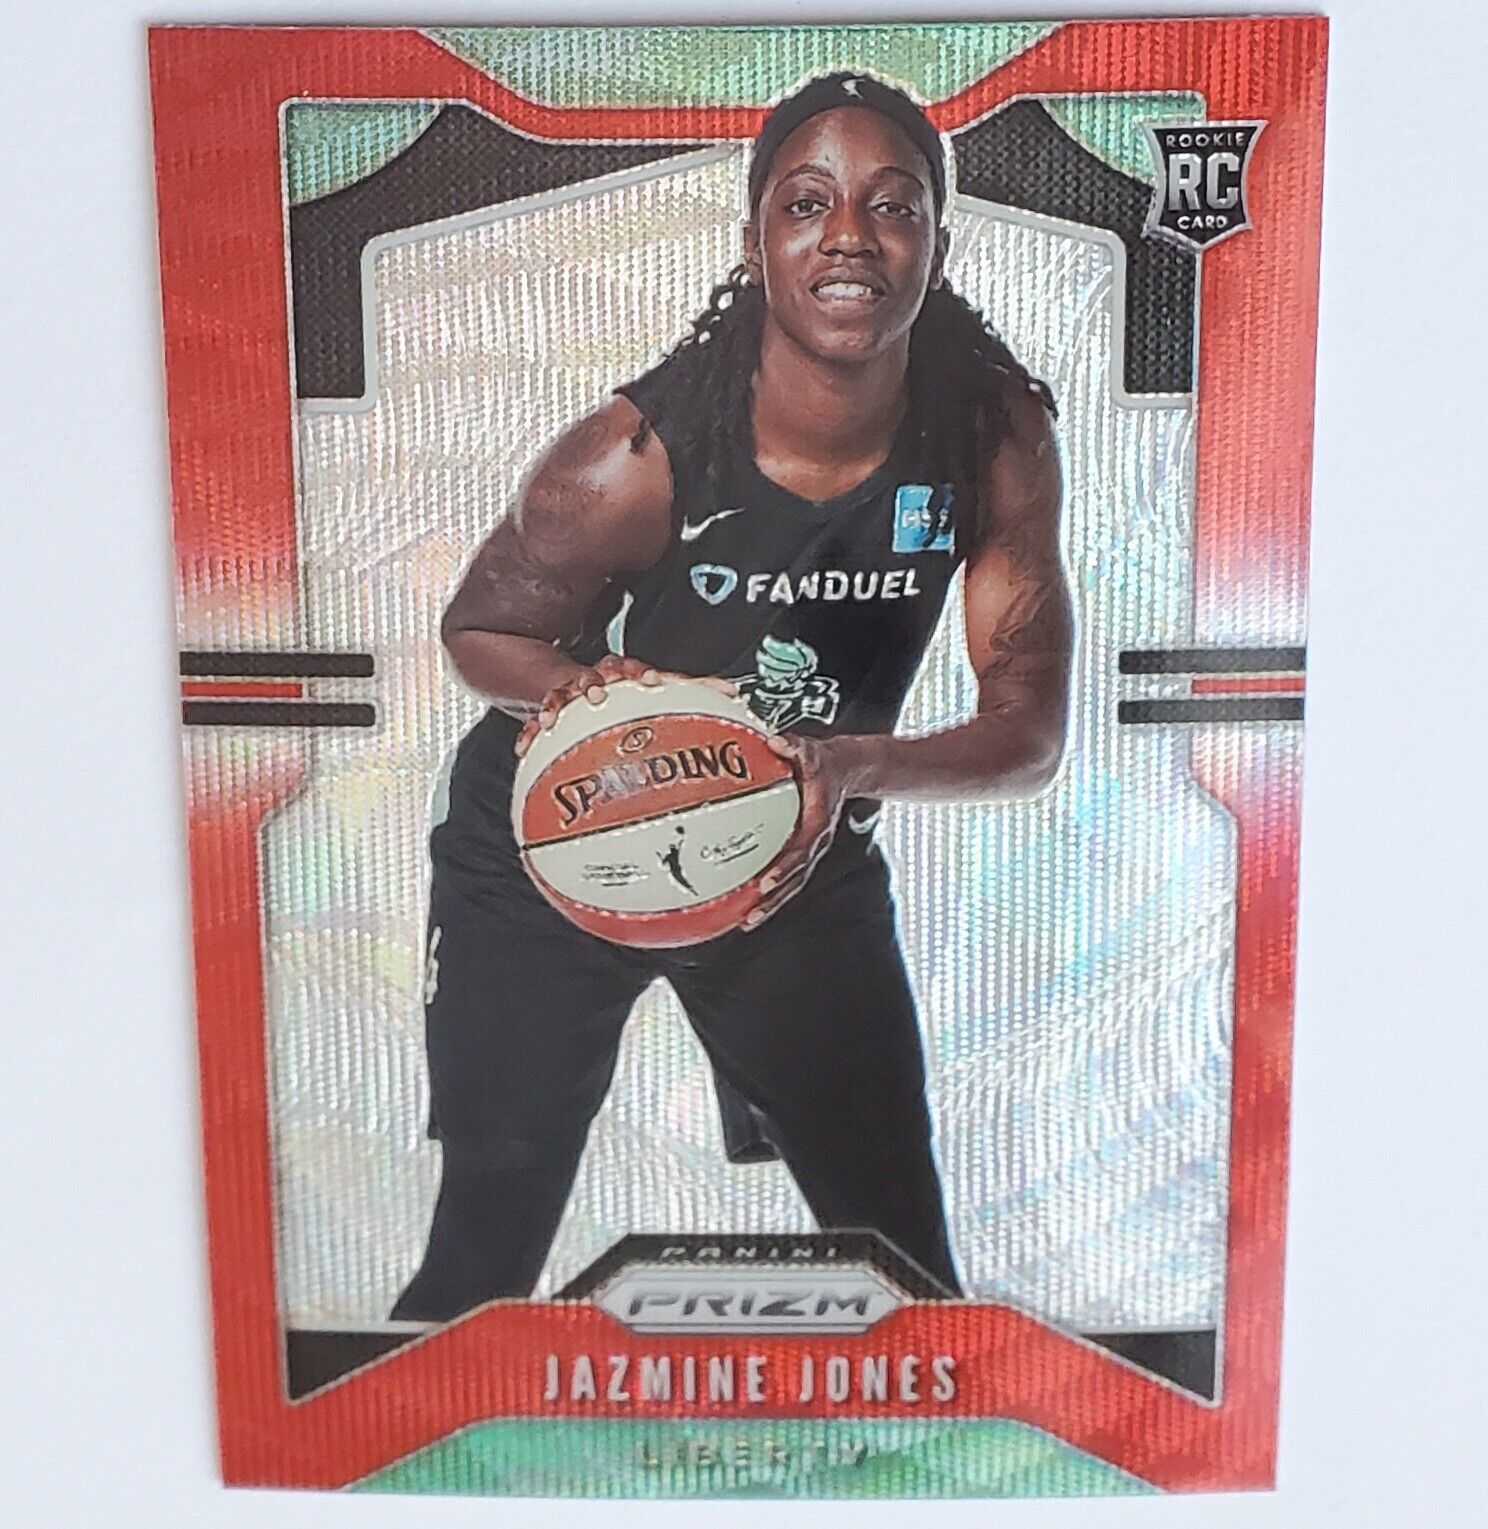 JAZMINE JONES 2020 Panini WNBA Basketball Rookie Card #100 RC RUBY WAVE PRIZM. rookie card picture